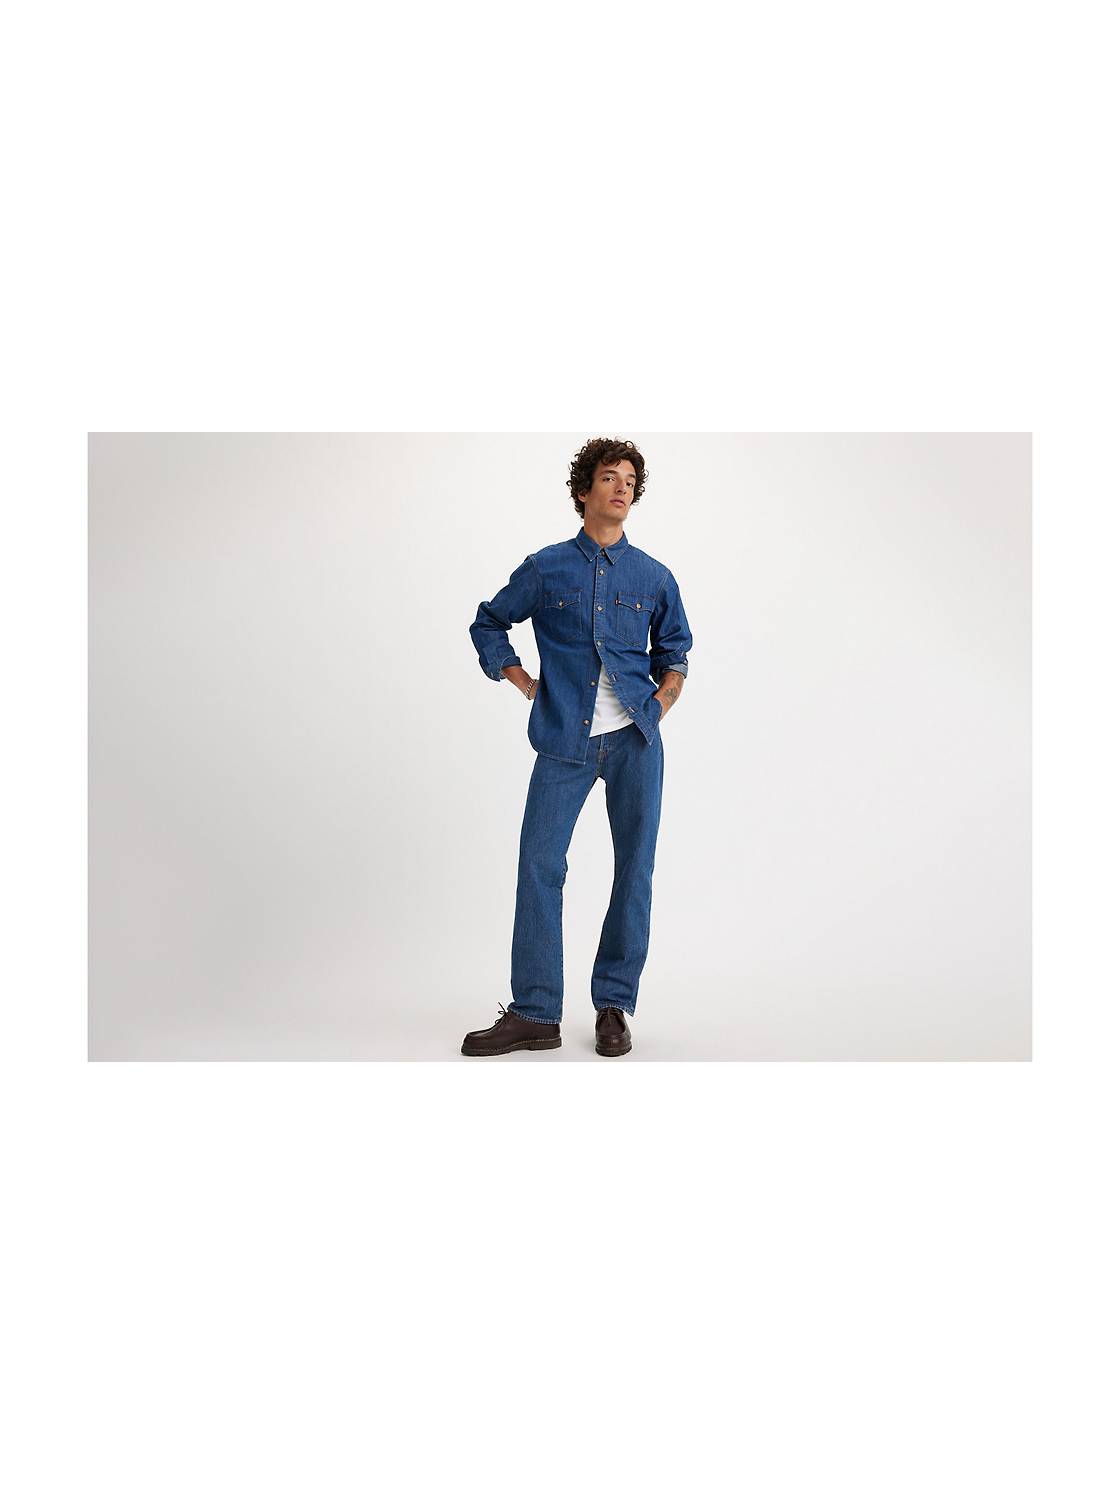 Levi 501 Original Fit Button Fly Jeans – Medium Stonewash — Dave's